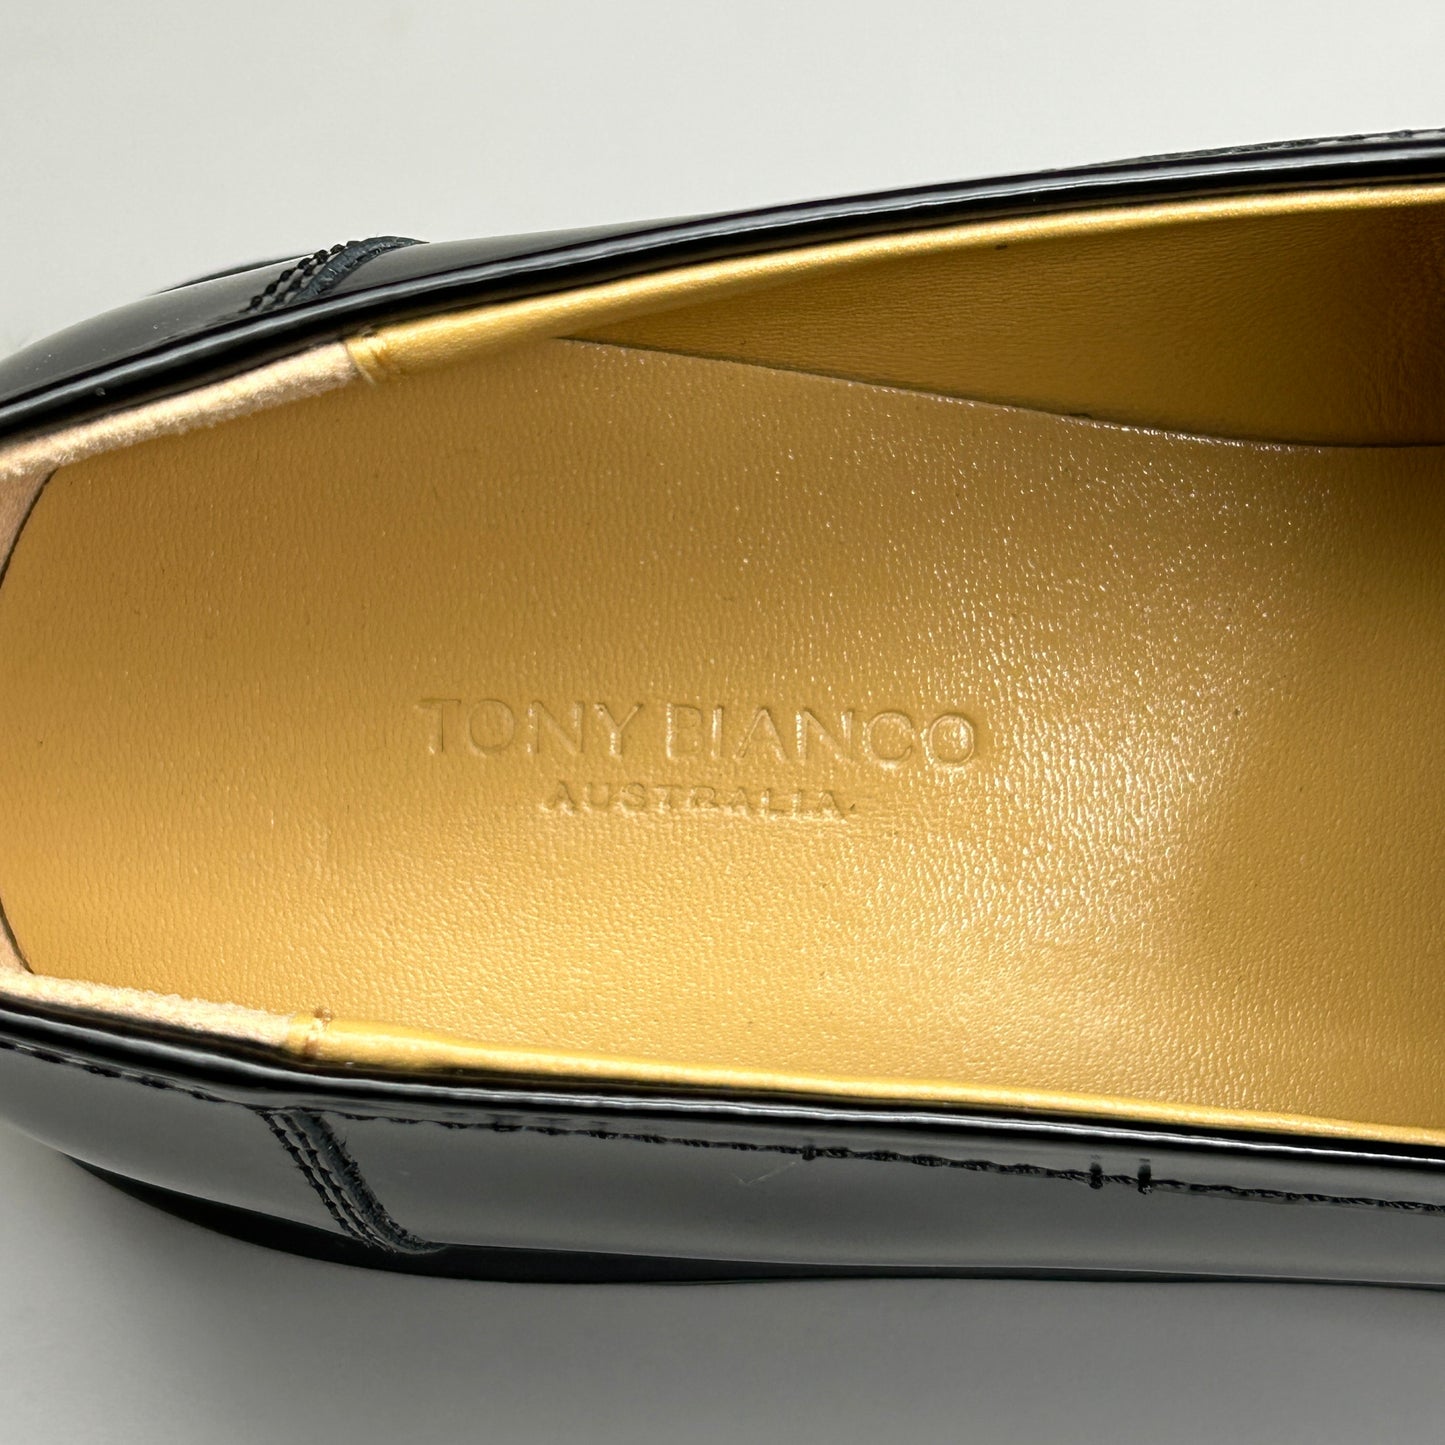 TONY BIANCO Wiz Black Hi Shine Casual Shoes Women's Sz 5 (New)